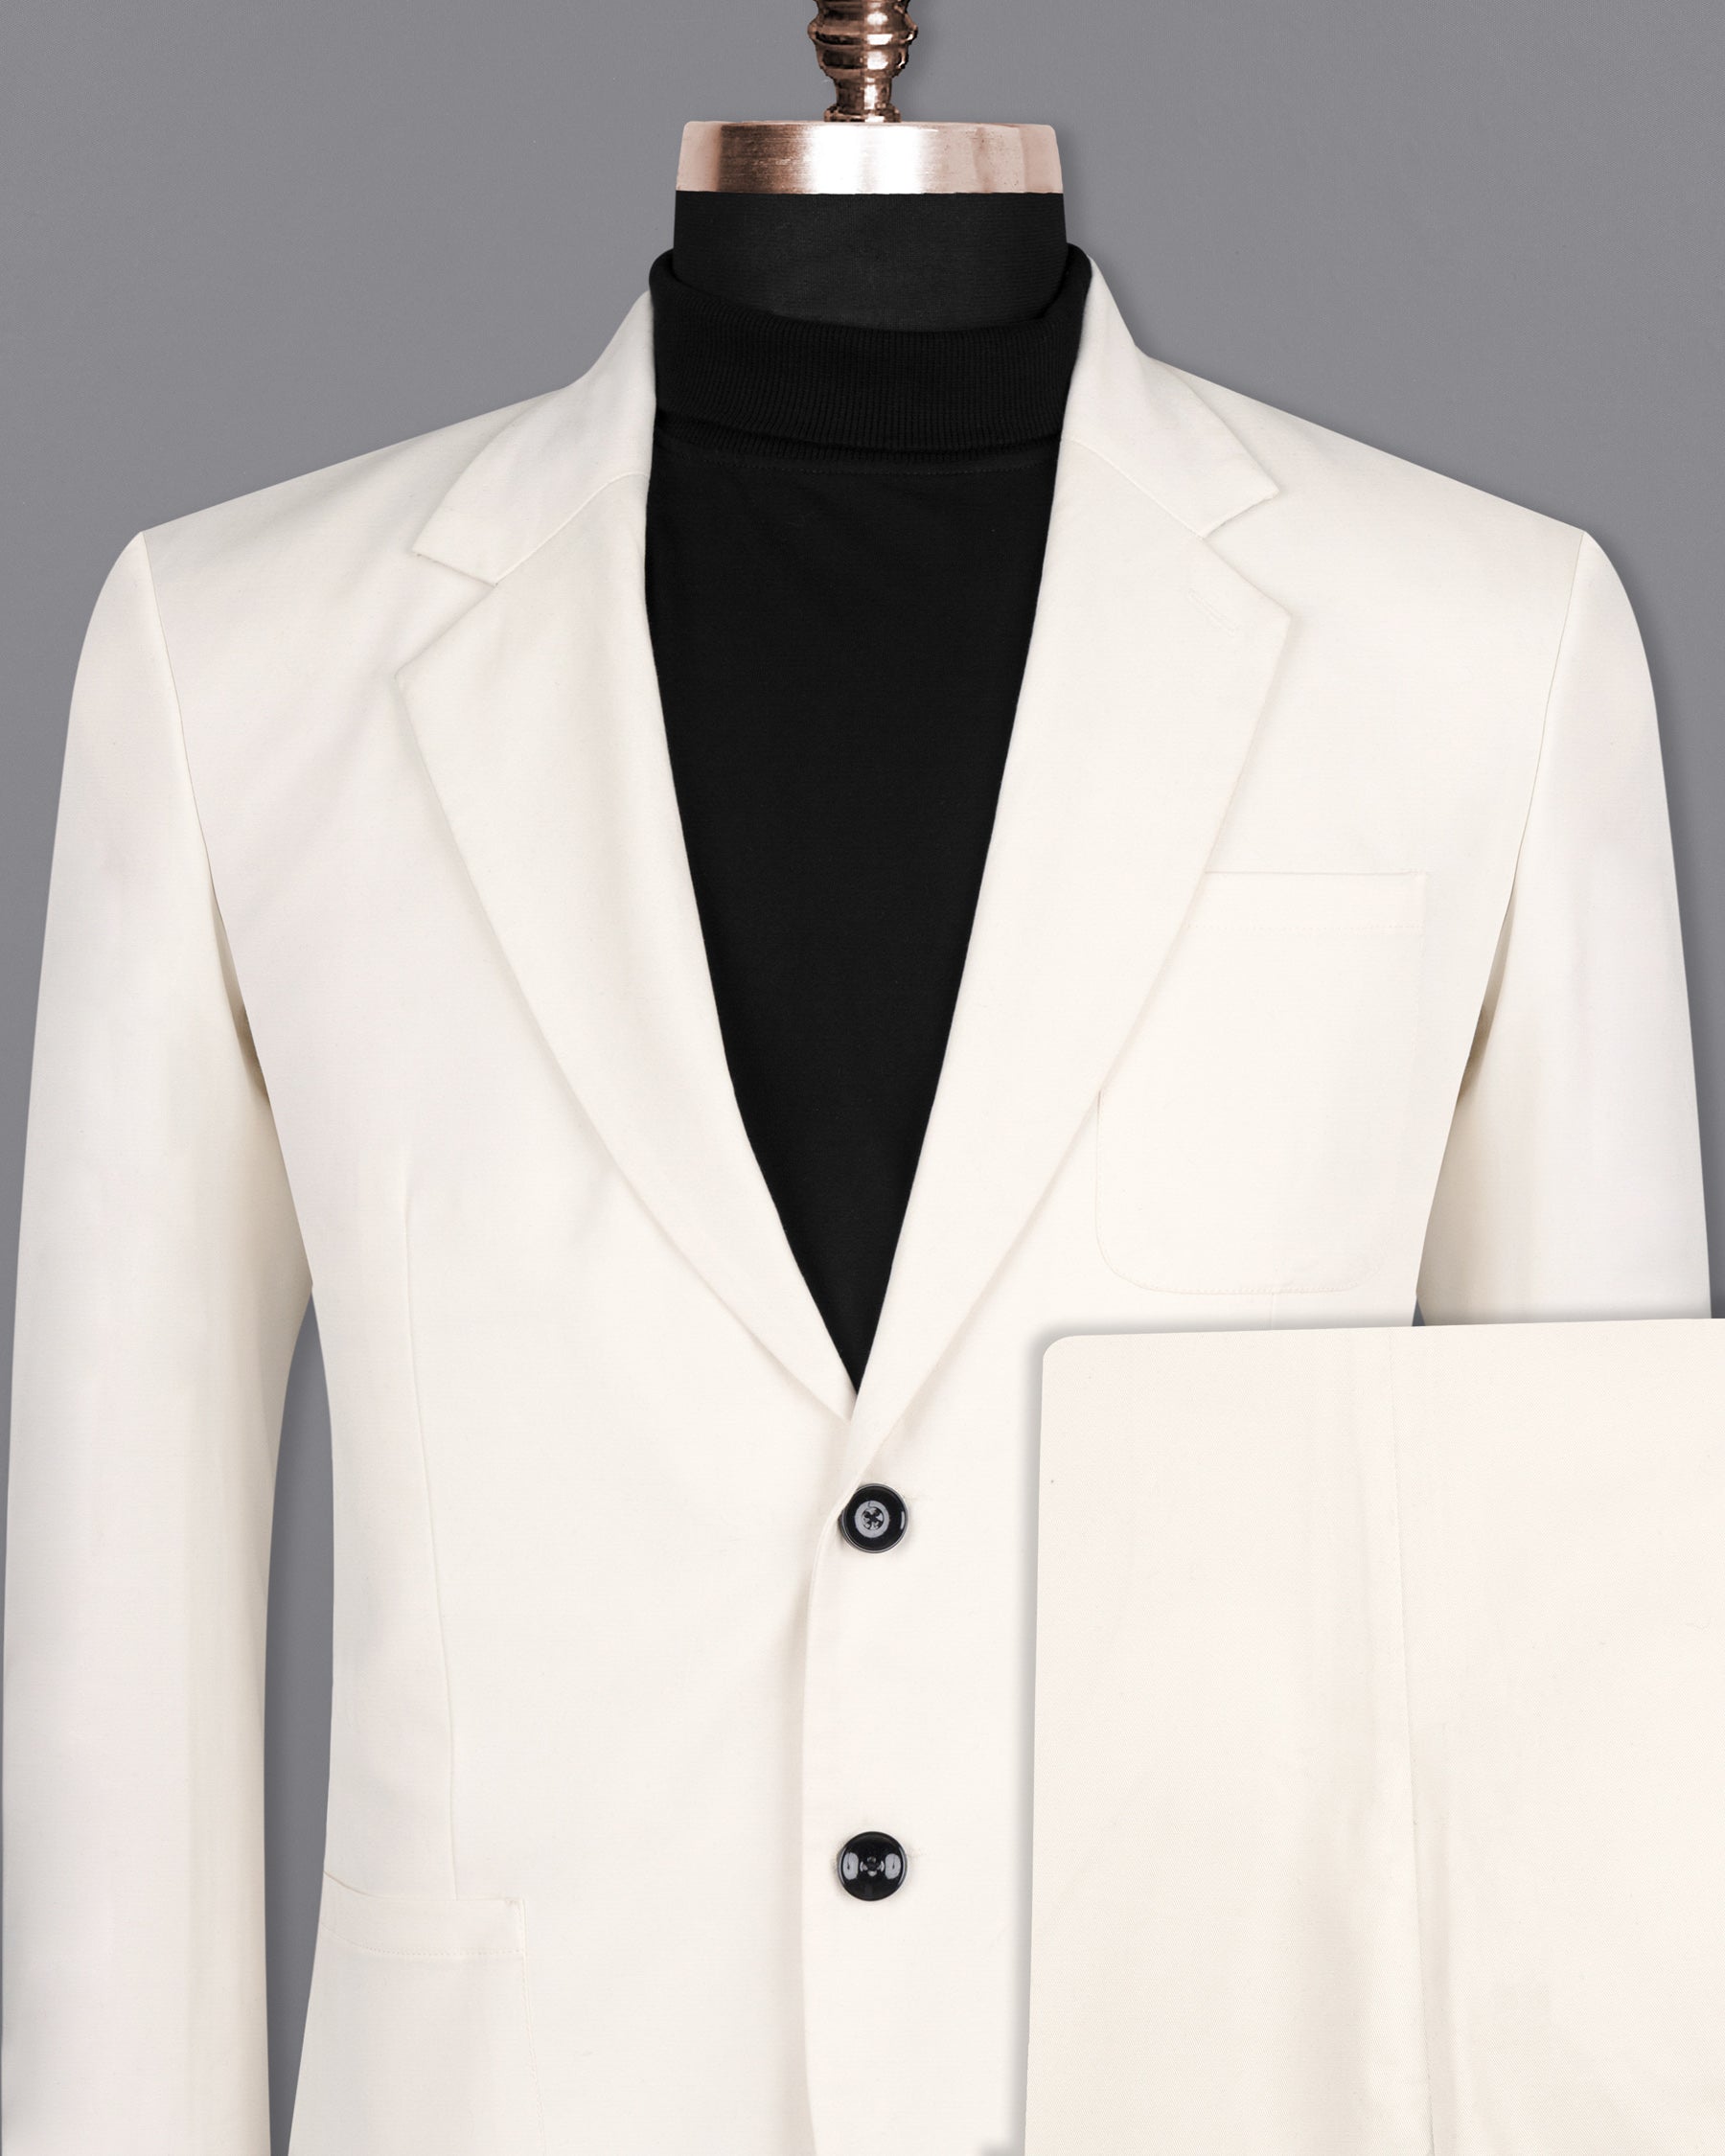 Bright White Premium Cotton Sports Suit